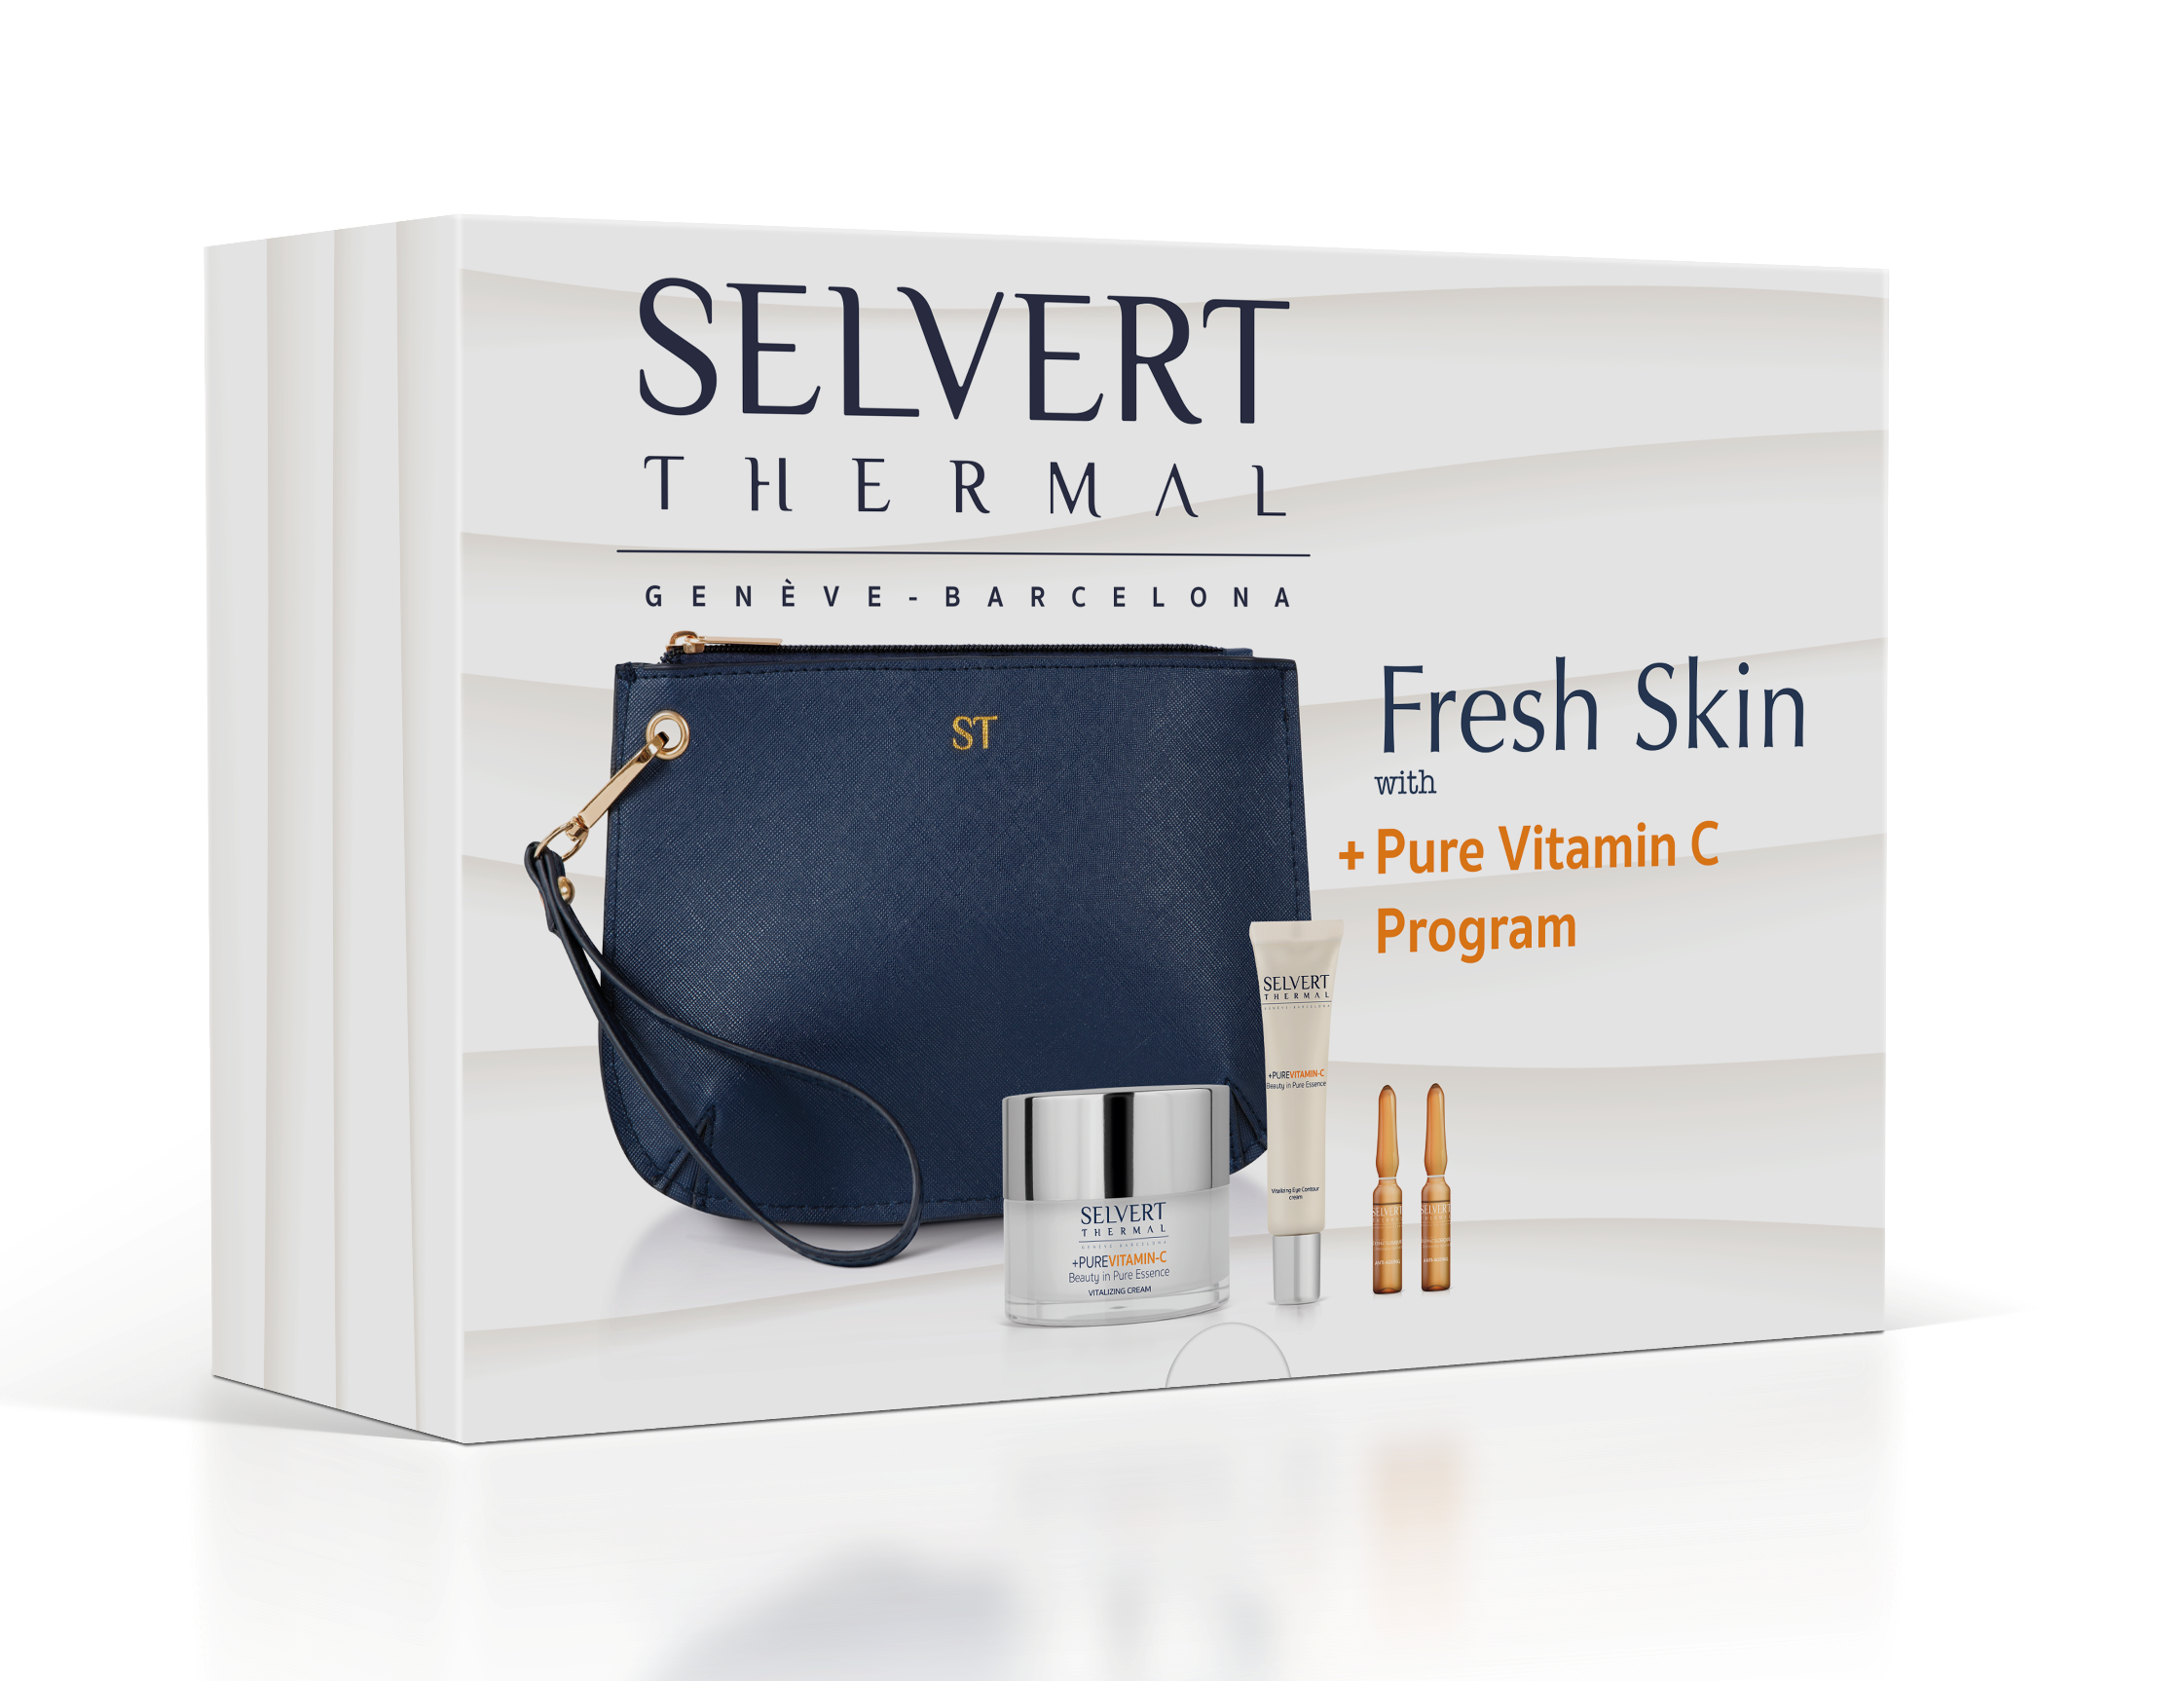 Nuevo programa Fresh Skin + Pure Vitamin C de Selvert Thermal